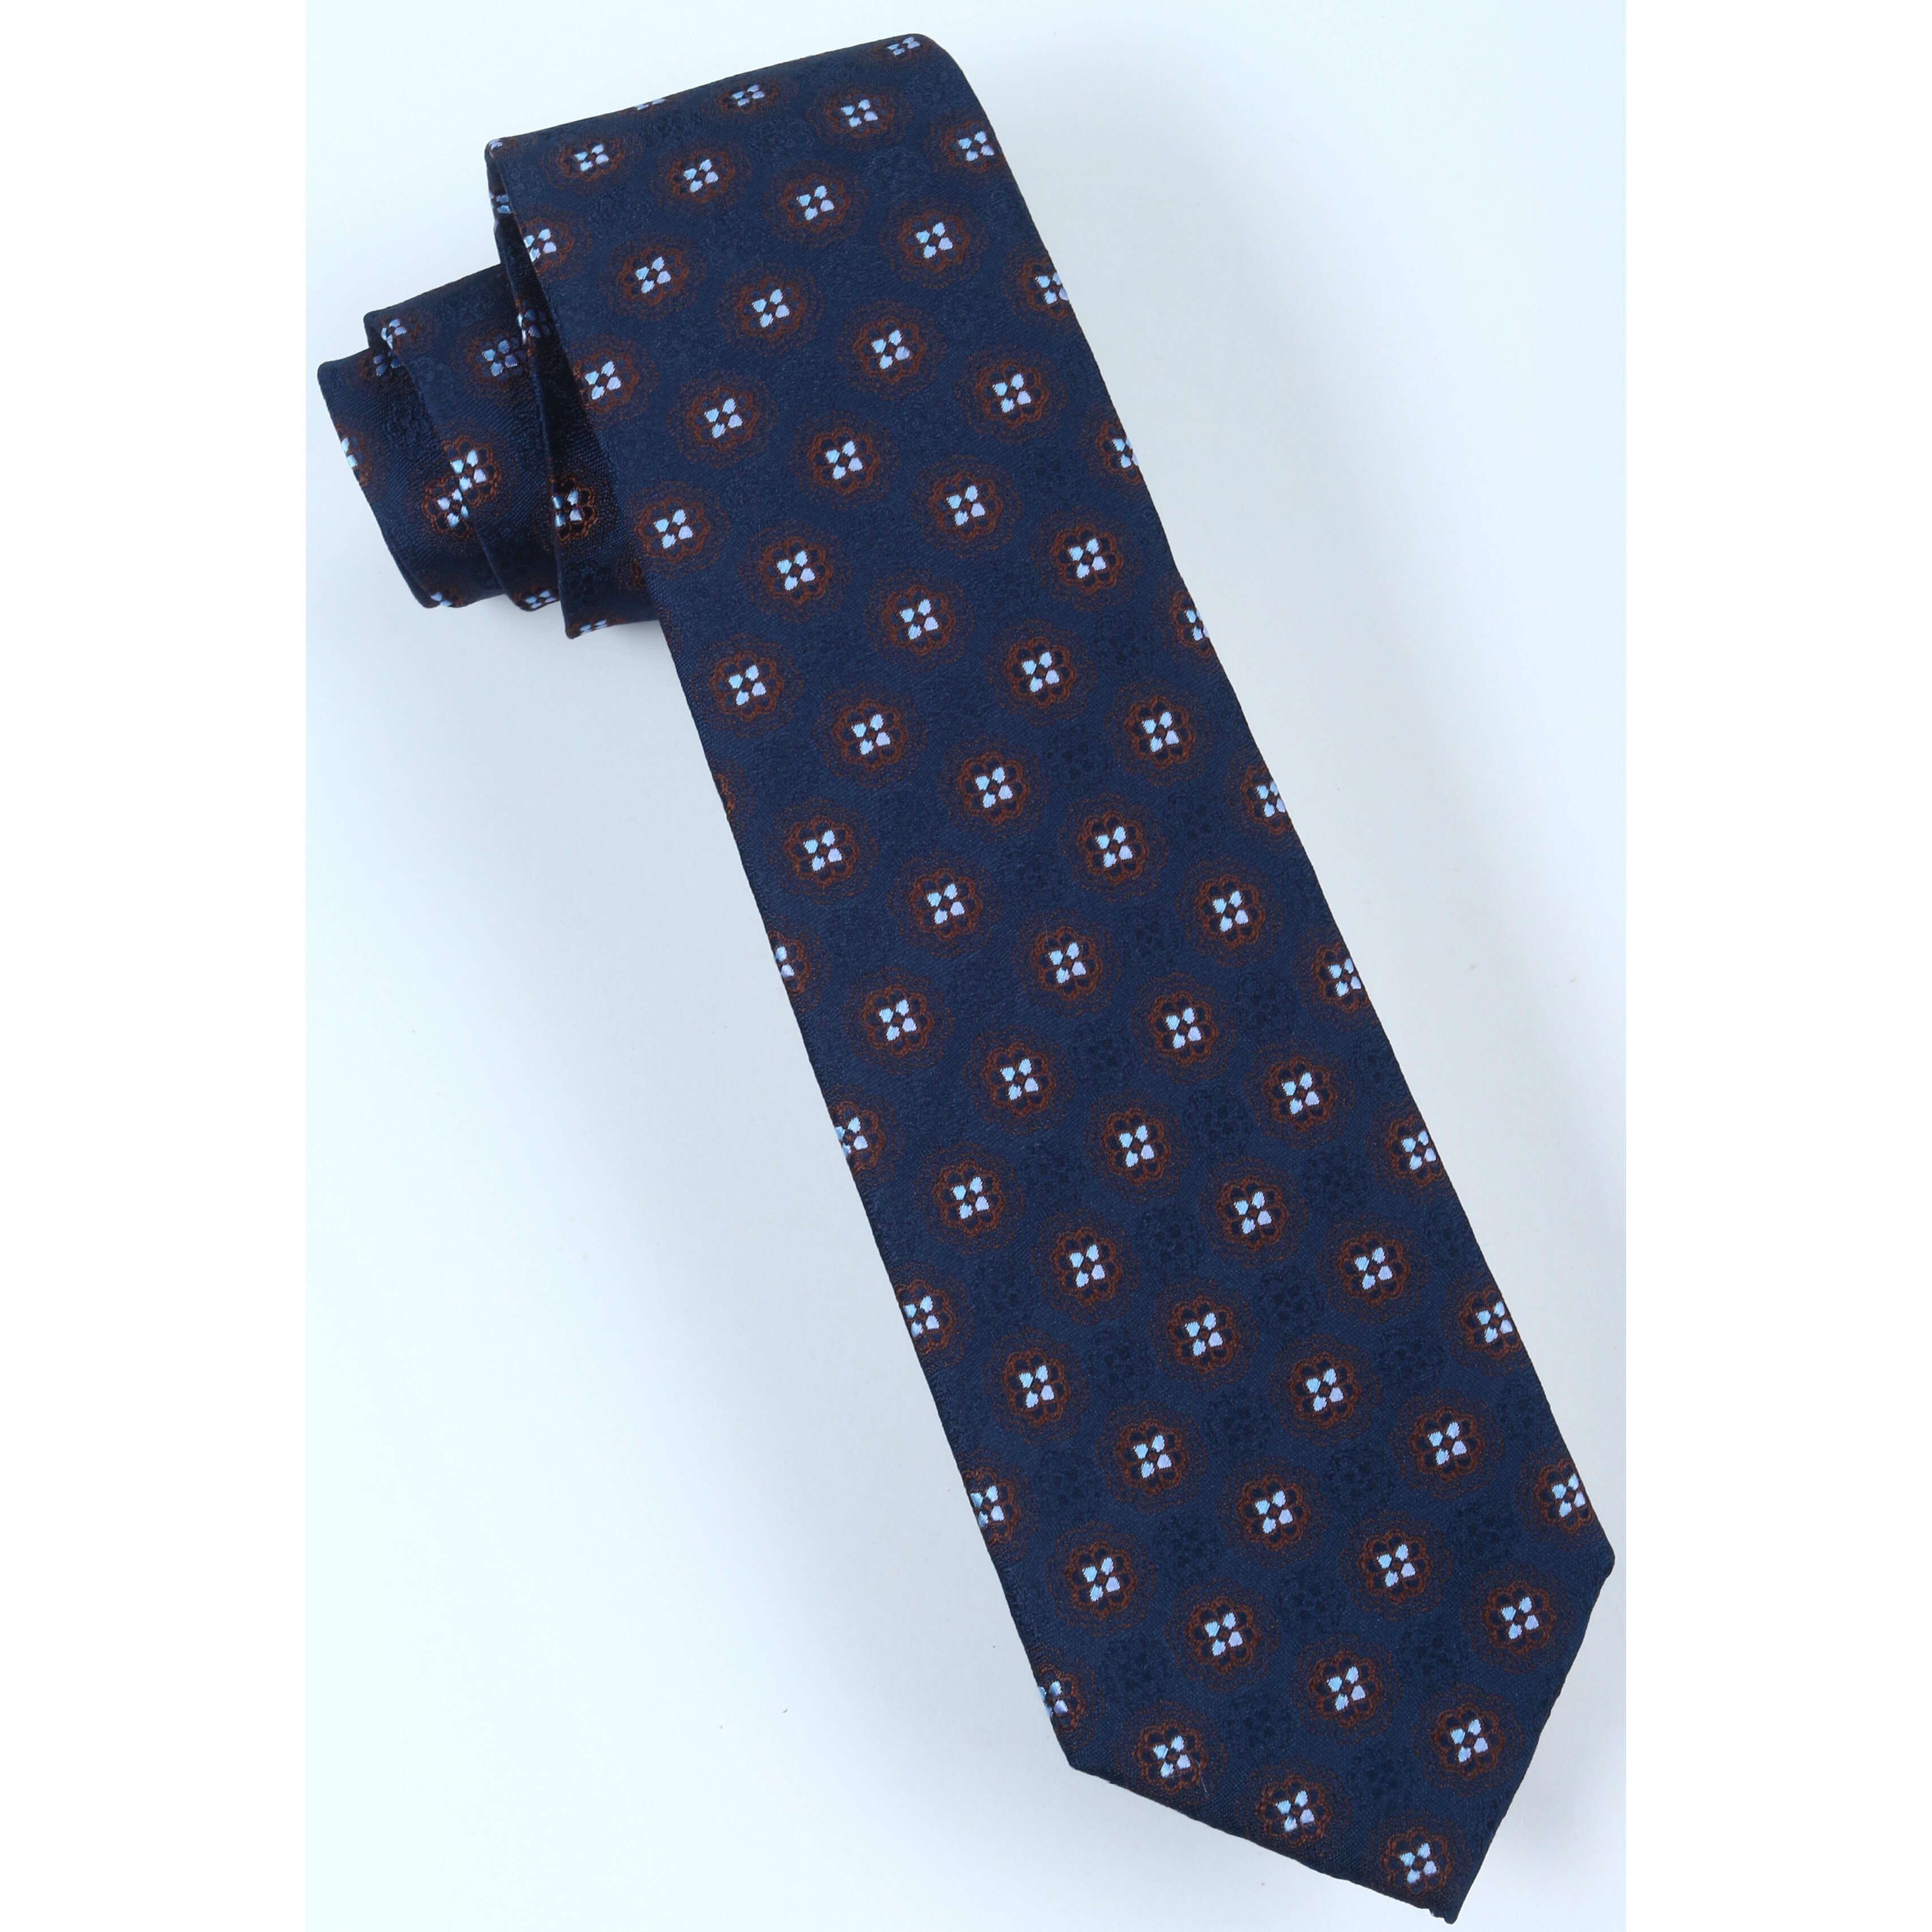 Brio Men's Navy/Brown Patterned Dress Tie